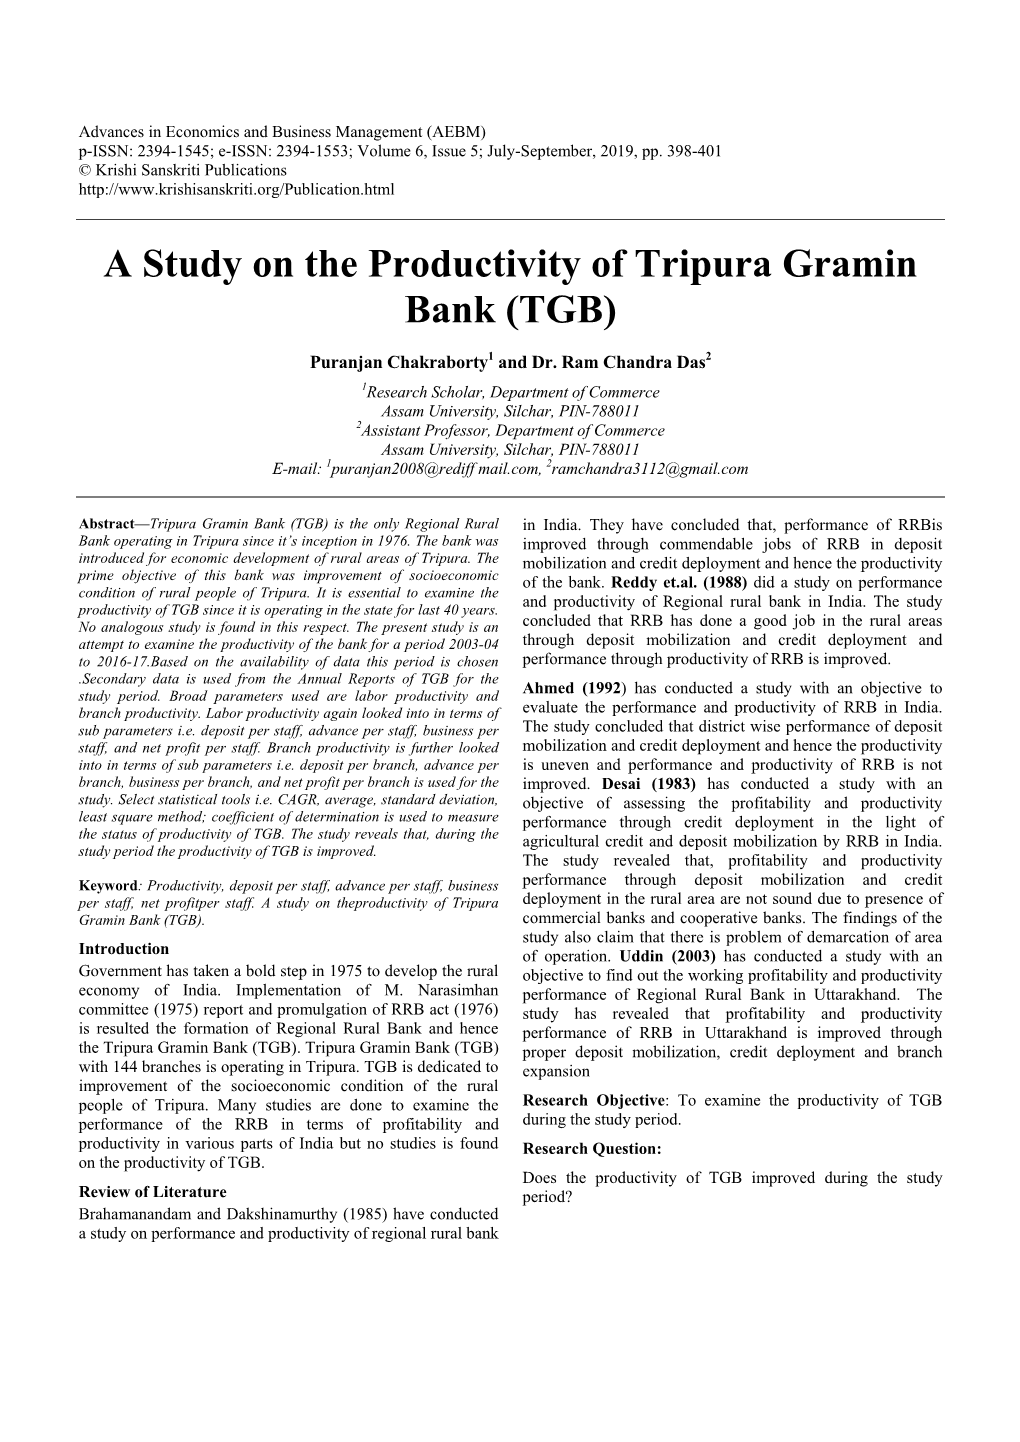 A Study on the Productivity of Tripura Gramin Bank (TGB)